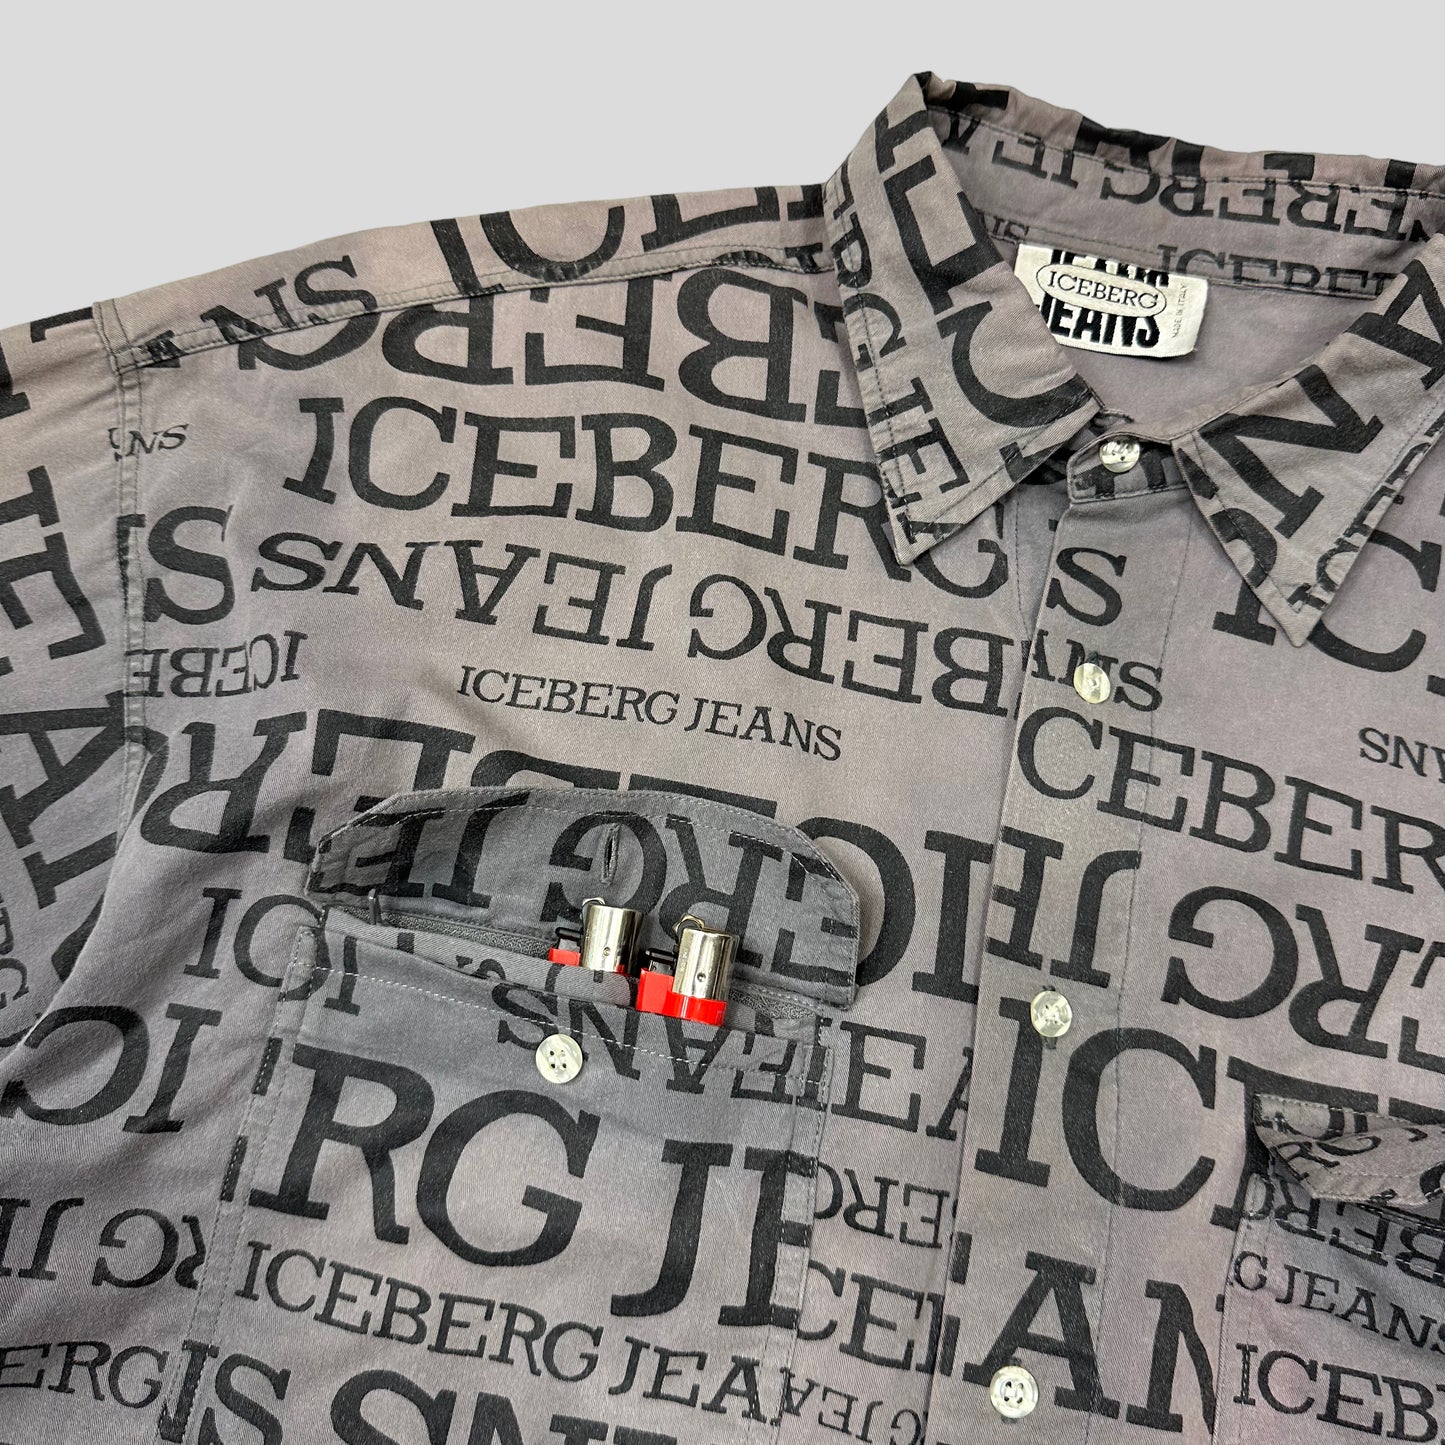 Iceberg Jeans 90’s Stash Pocket Spellout Shirt - L